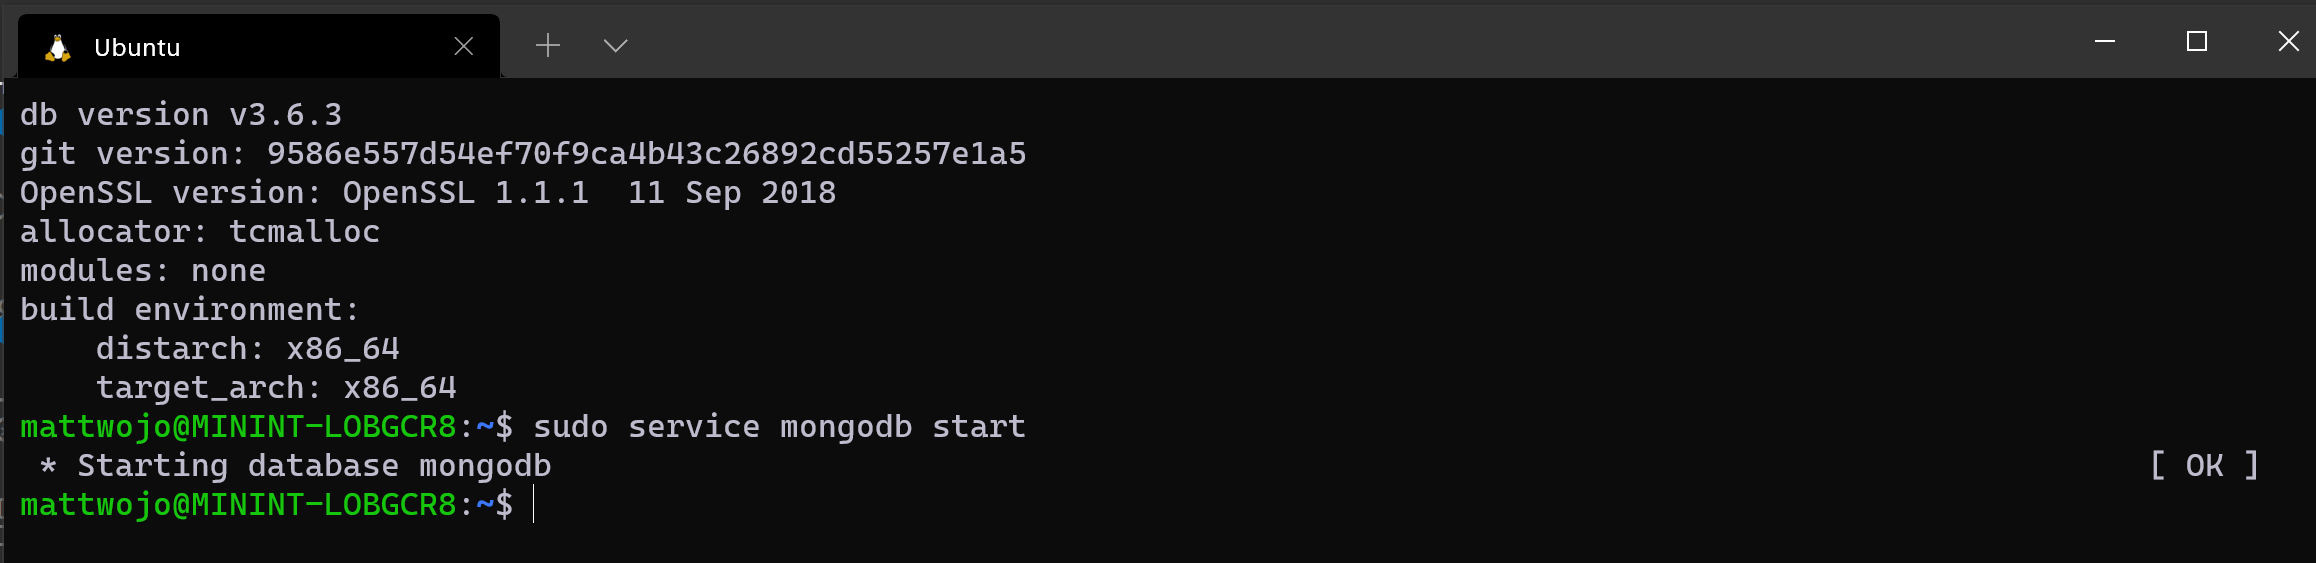 Running MongoDB in Ubuntu via WSL